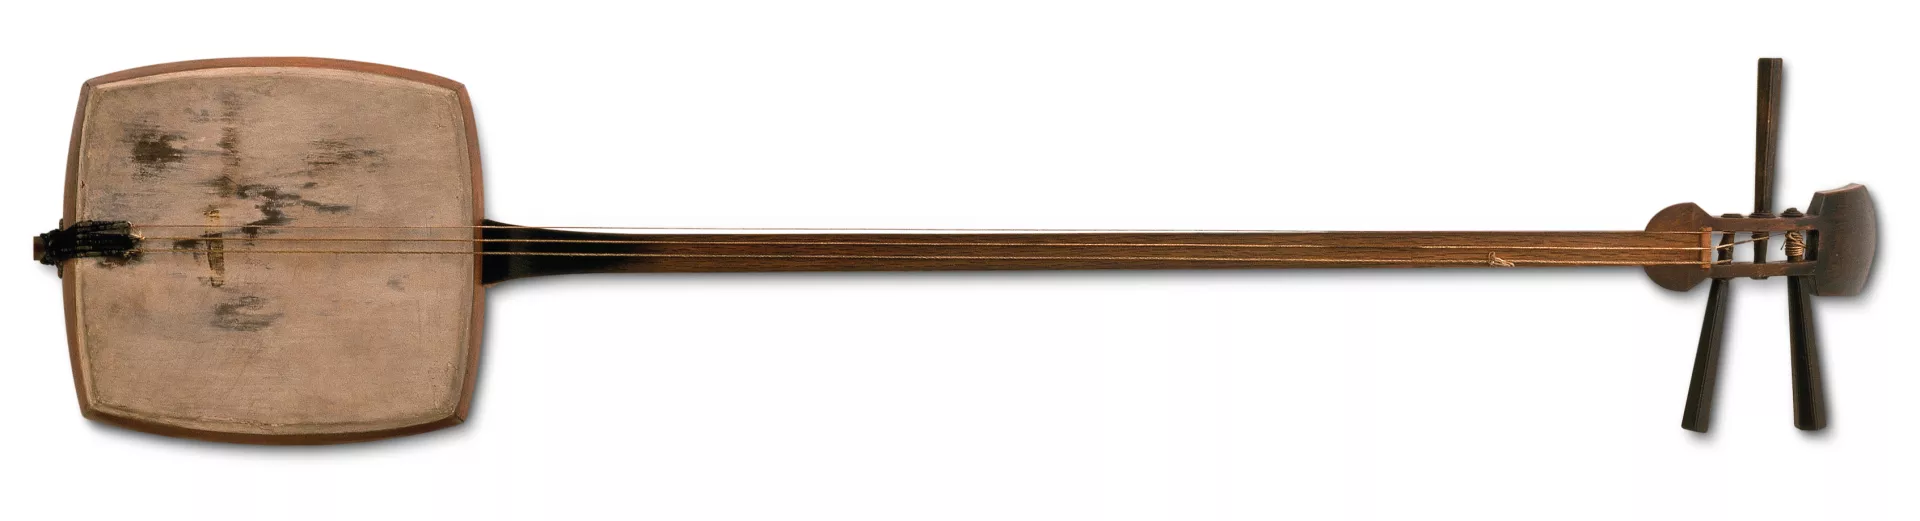 Traditional Japanese Music - Shamisen Instrument